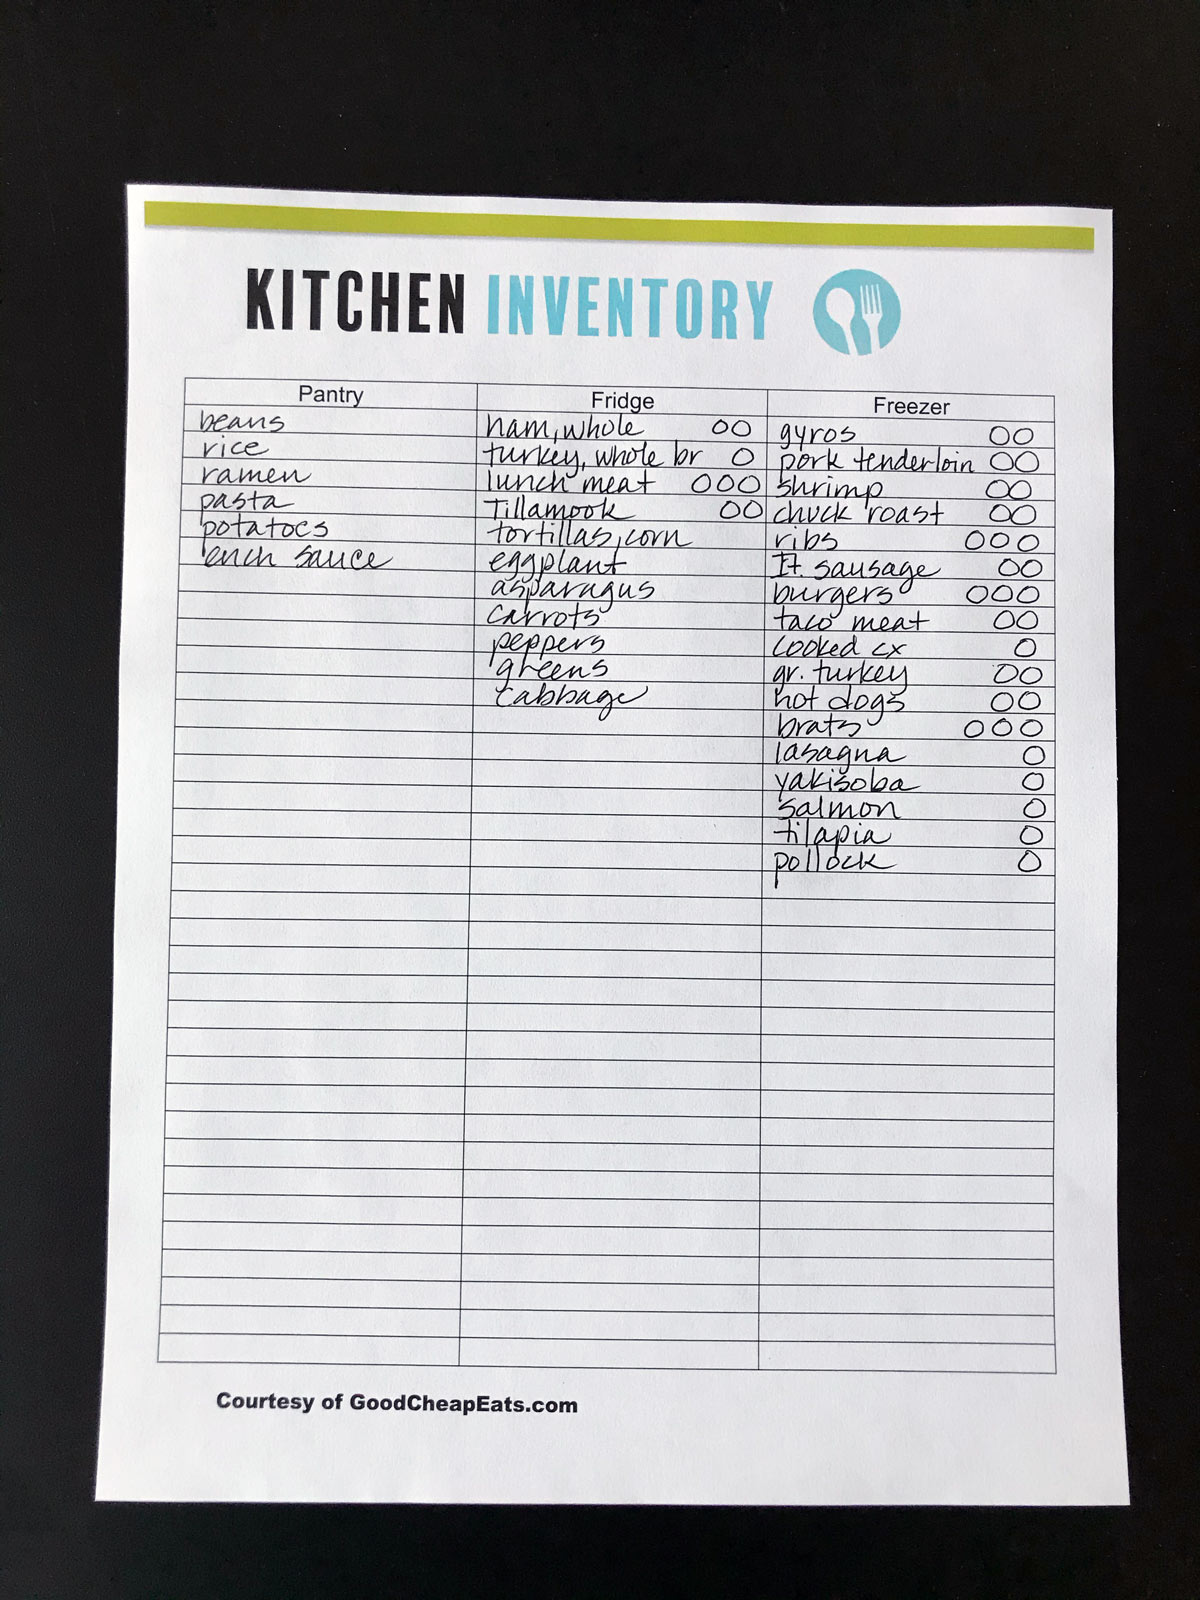 printed kitchen inventory worksheet on black table.